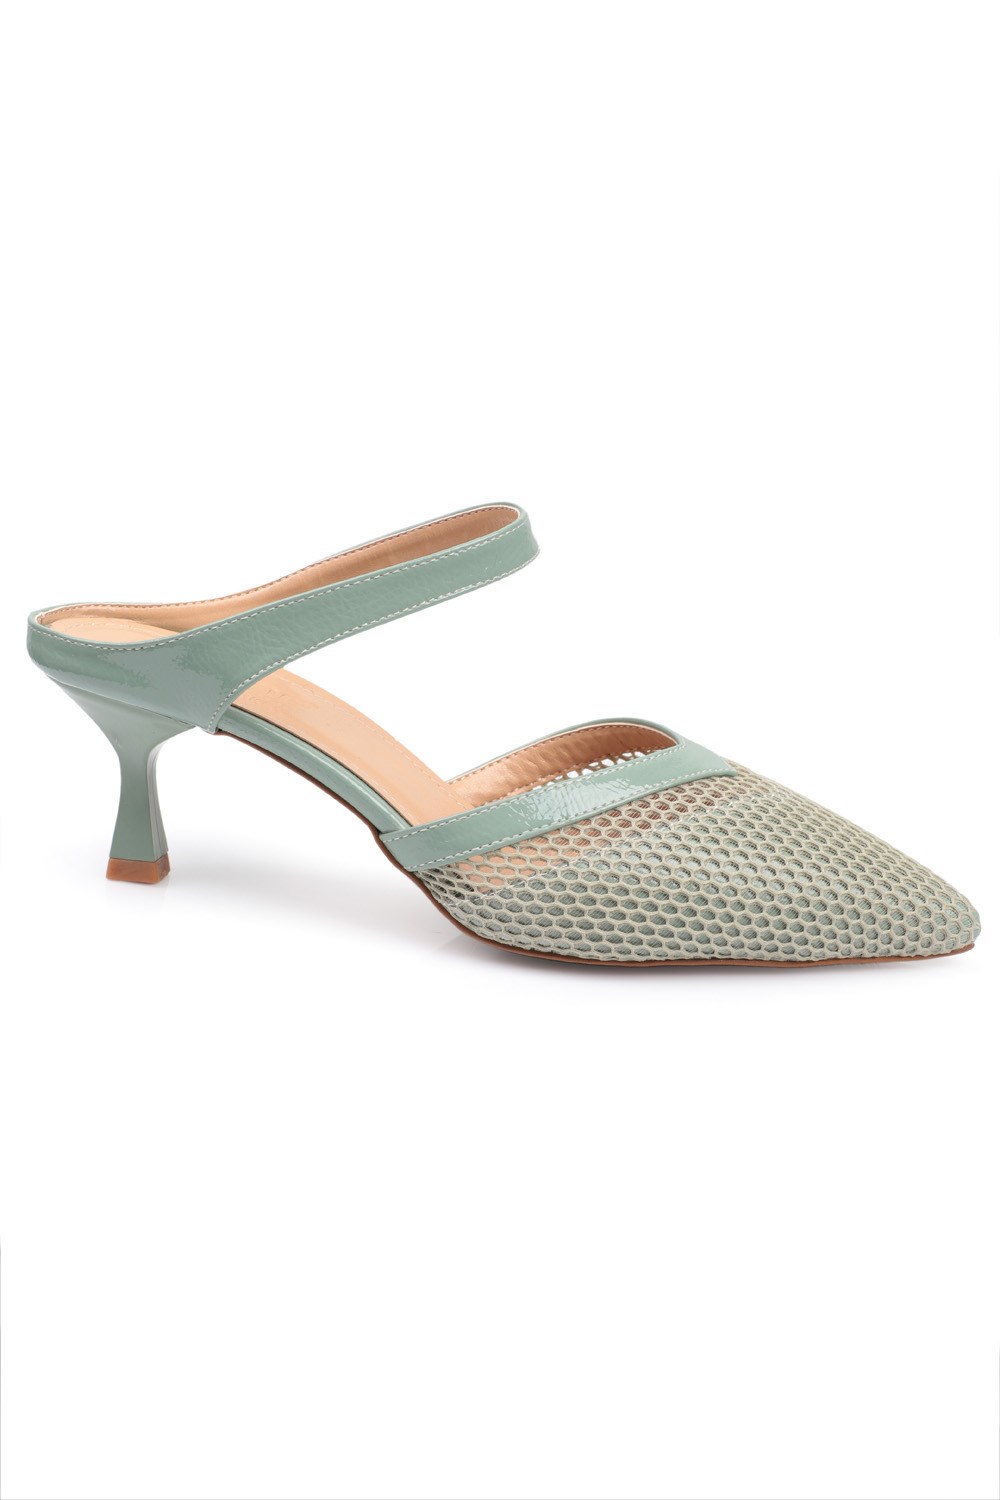 liefdadigheid Veeg Negen Capone Mid Heel Crinkly Patent Leather Close Toe Women Mint Green Sandals |  caponeoutfitters.com